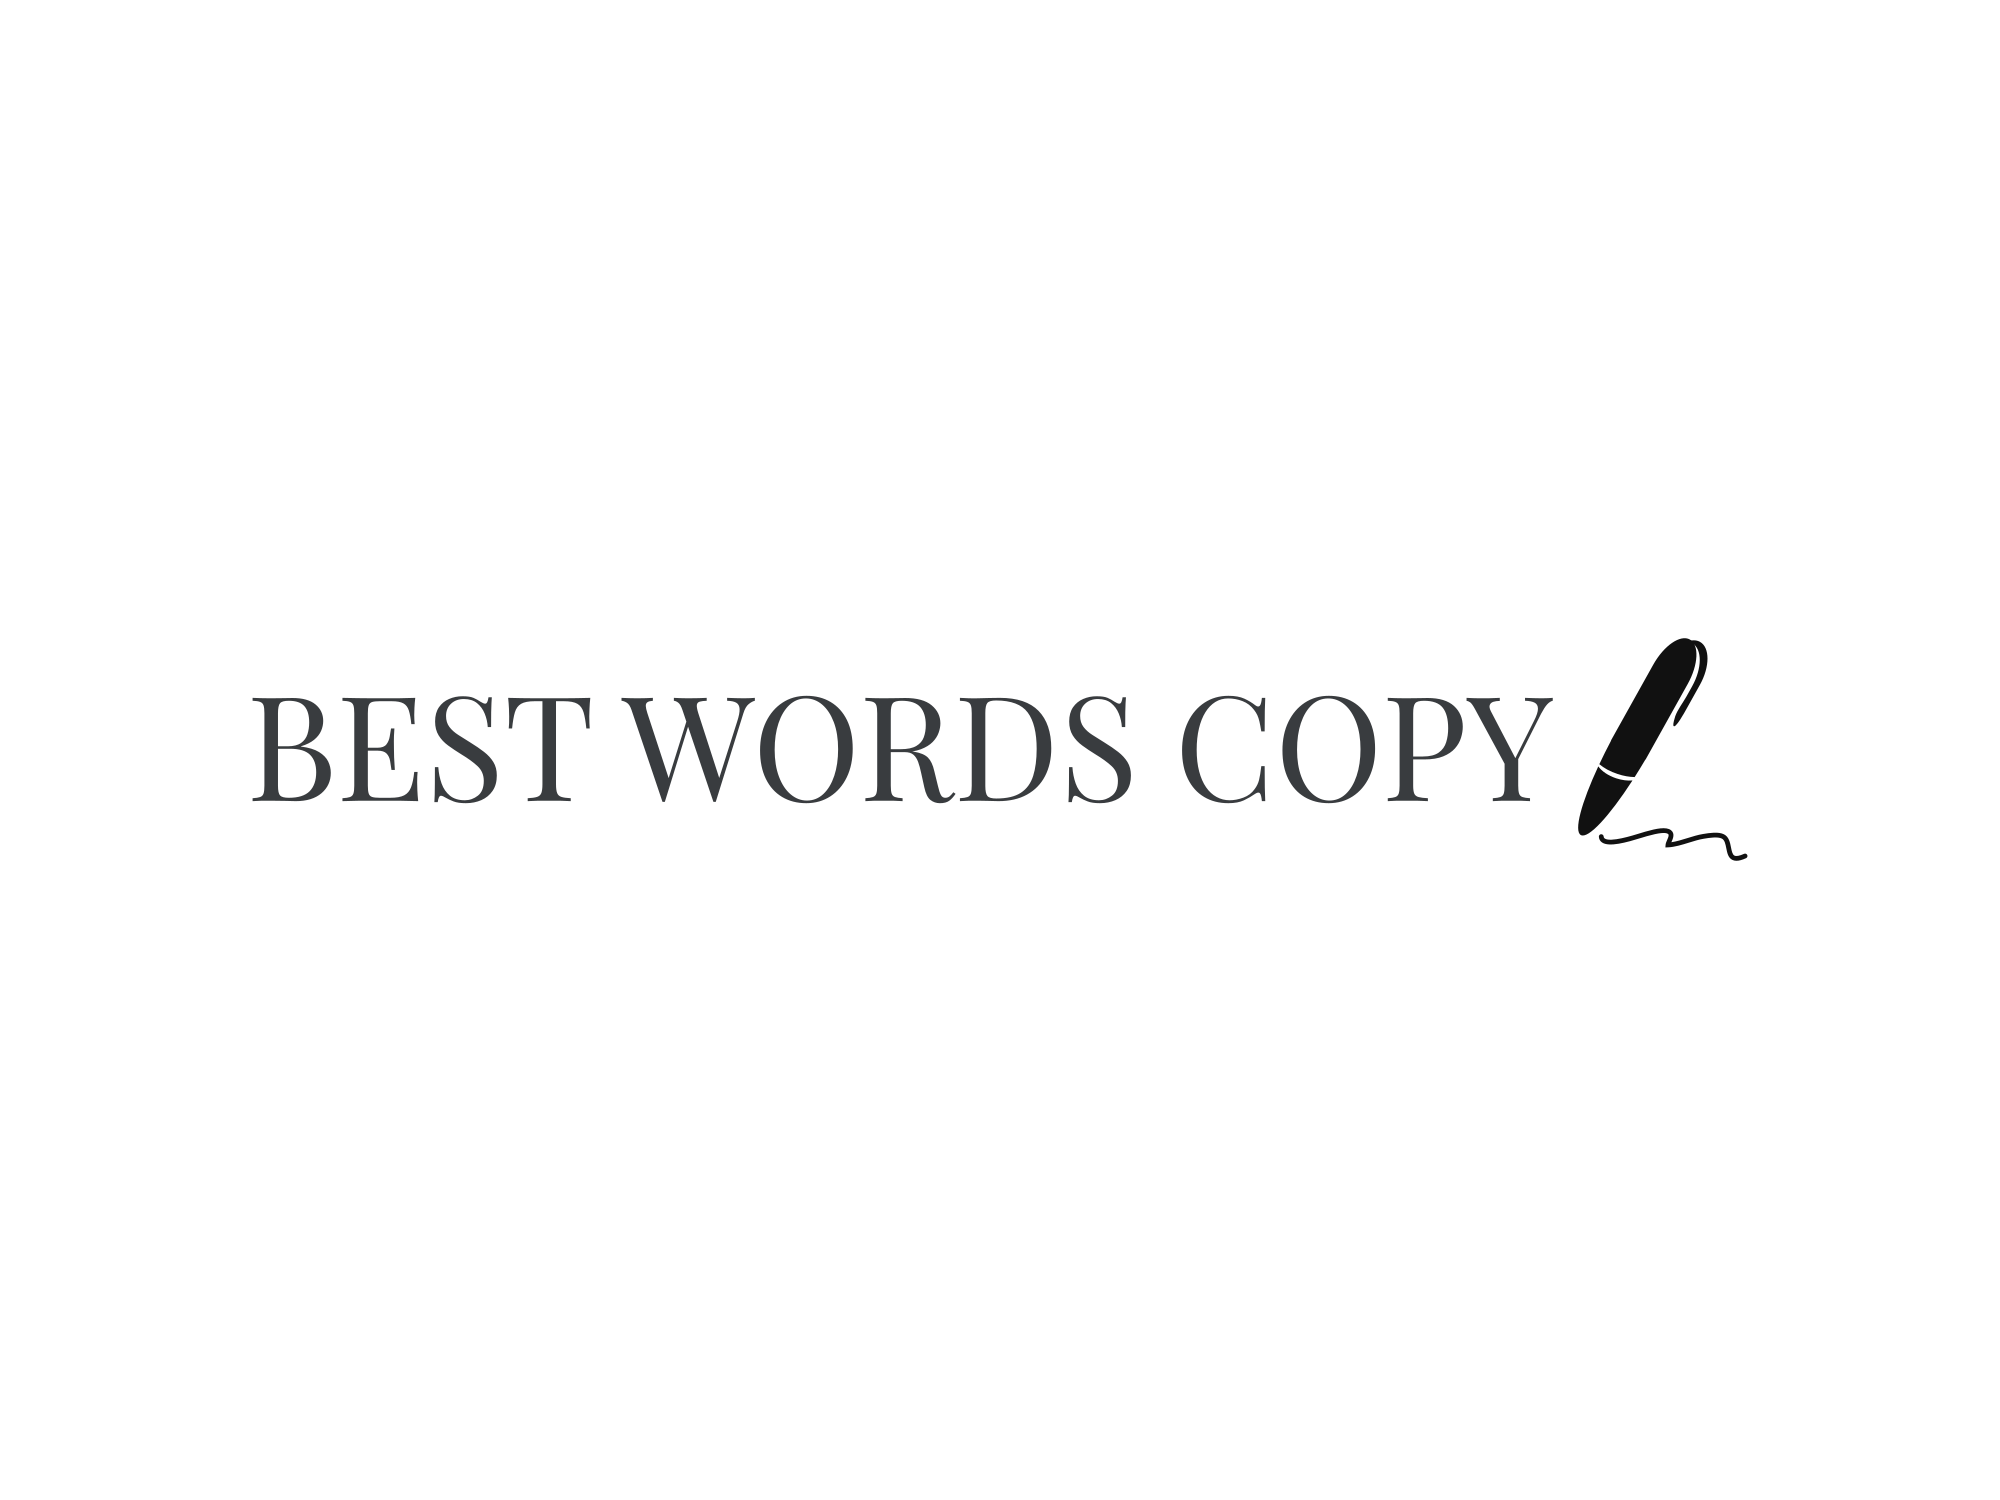 Best Words Copy company logo